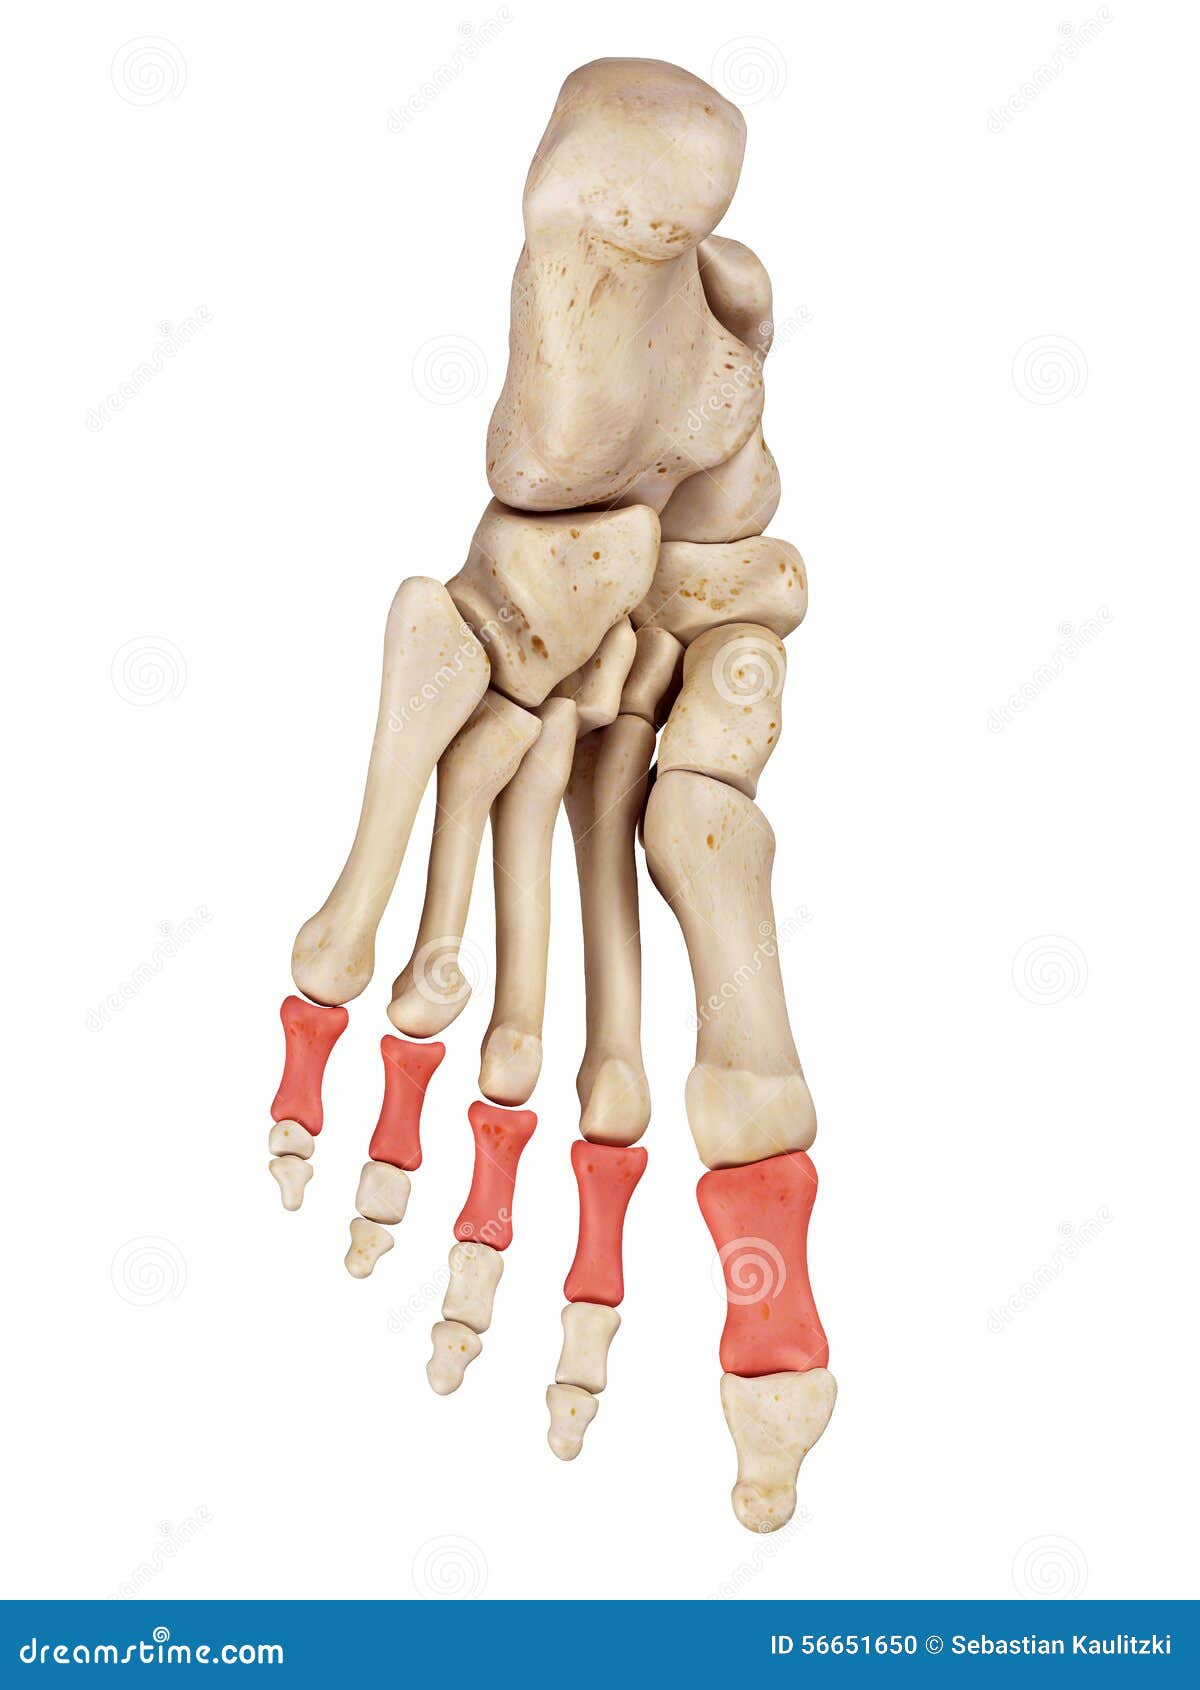 the proximal phalanx bones